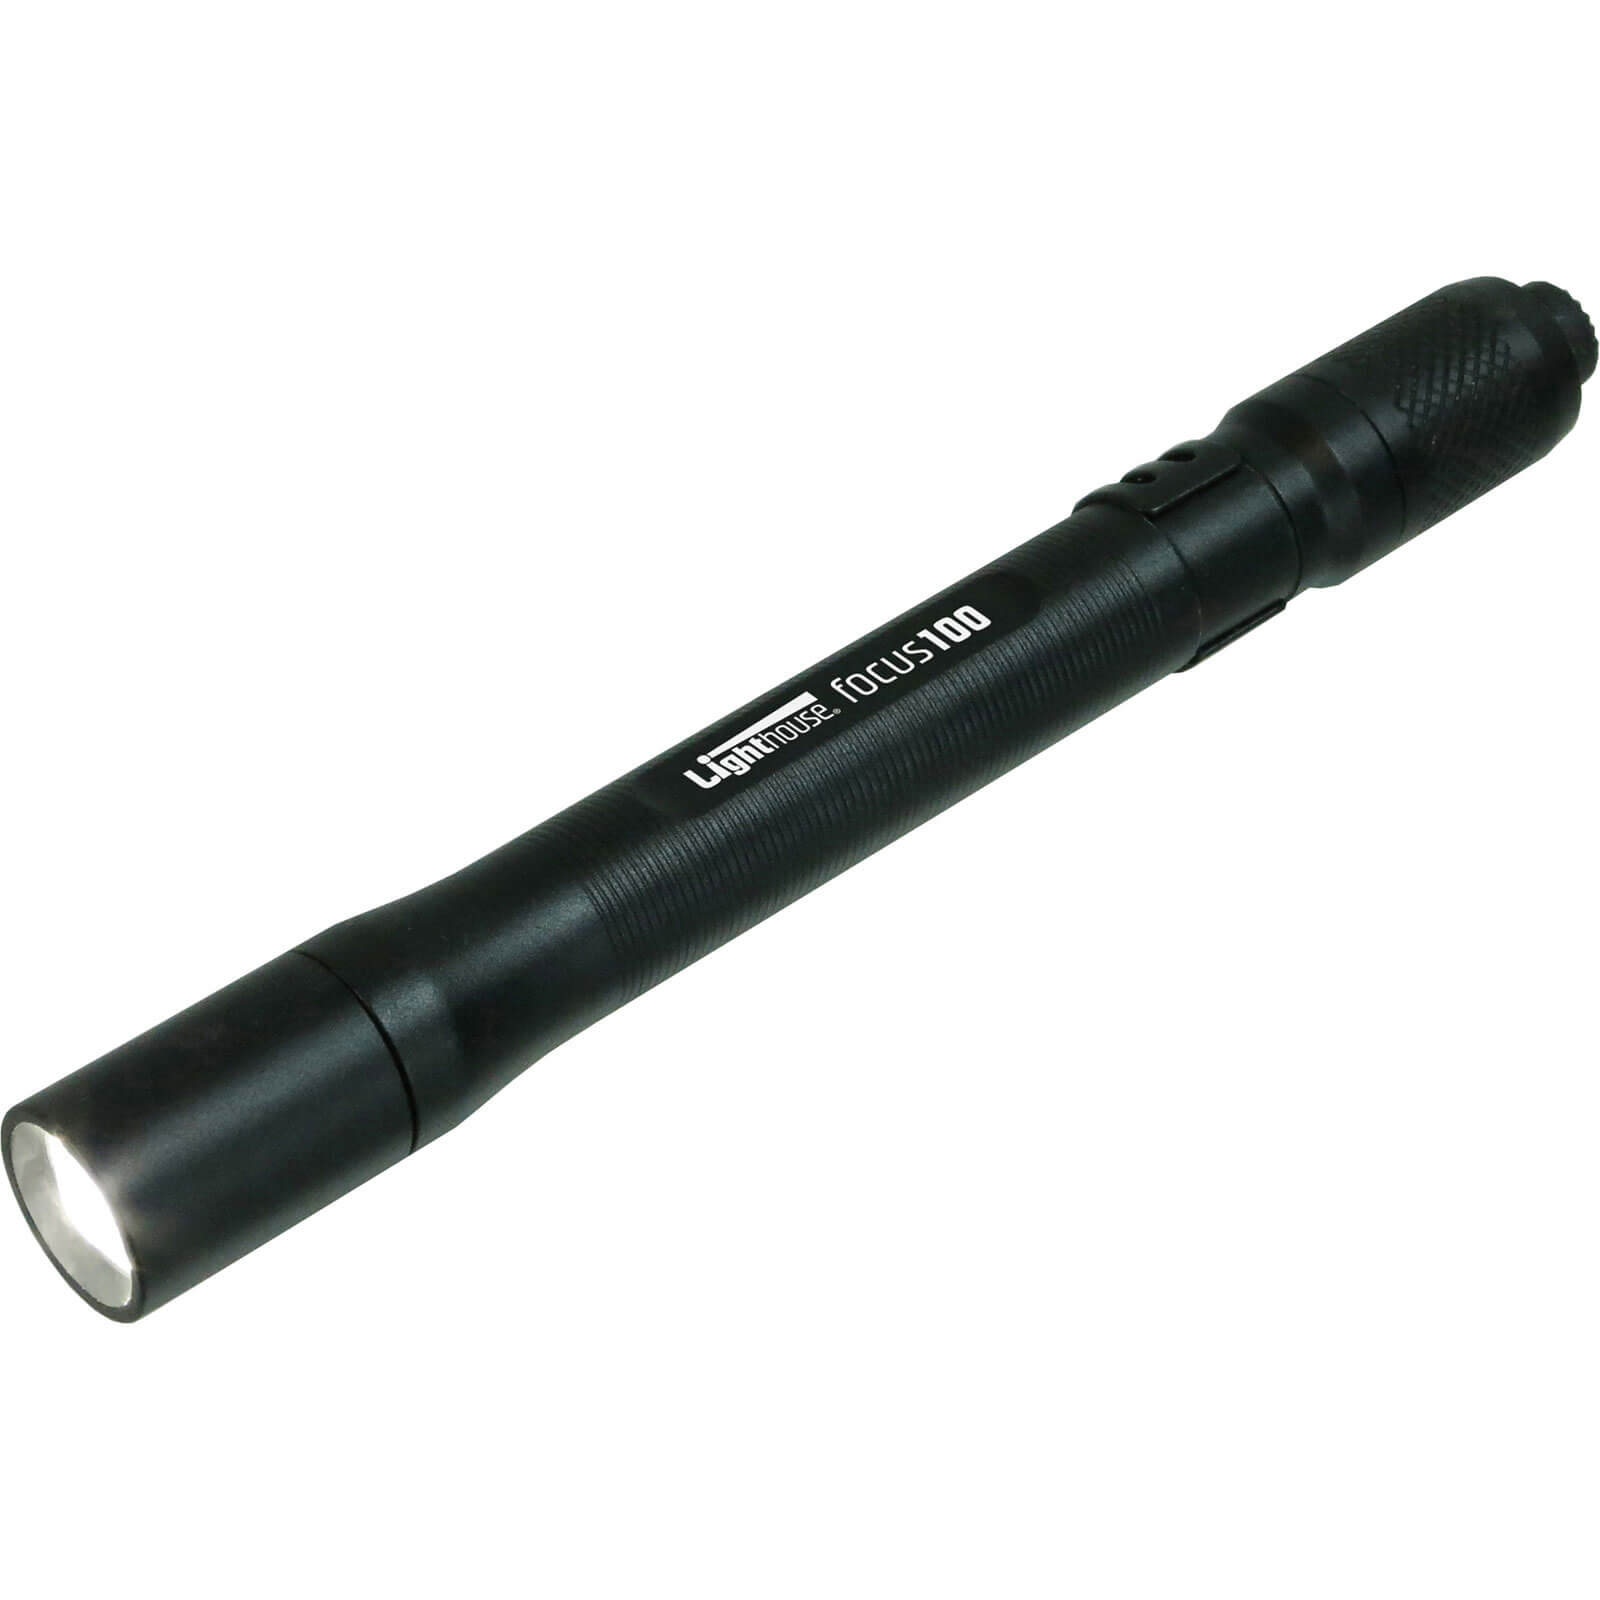 Image of Lighthouse Focus 100 Elite High Performance 100 Lumens LED Pen Torch Black